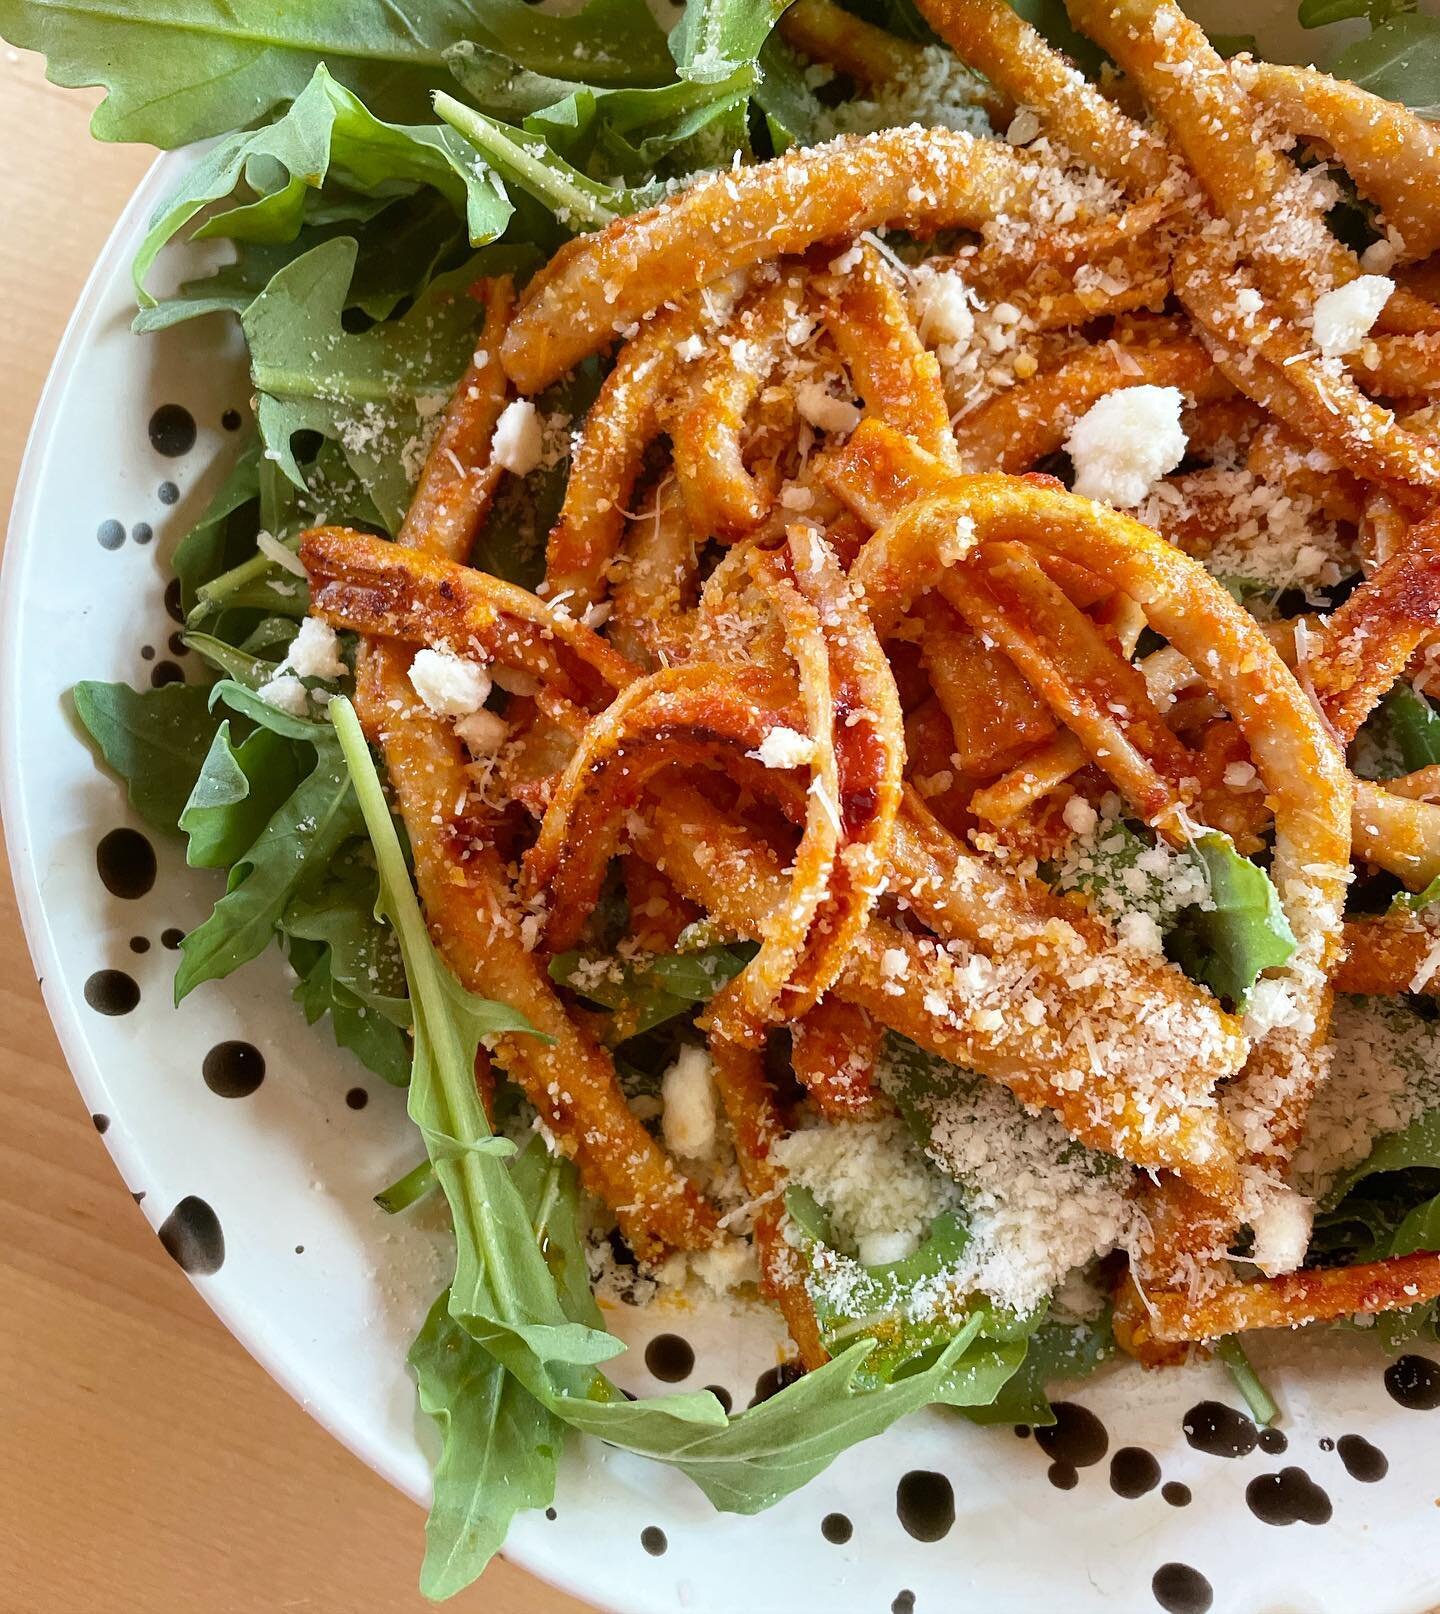 My kind of salad. Pan-fried maccheroni al ferretto over arugula. 🍝 🥗